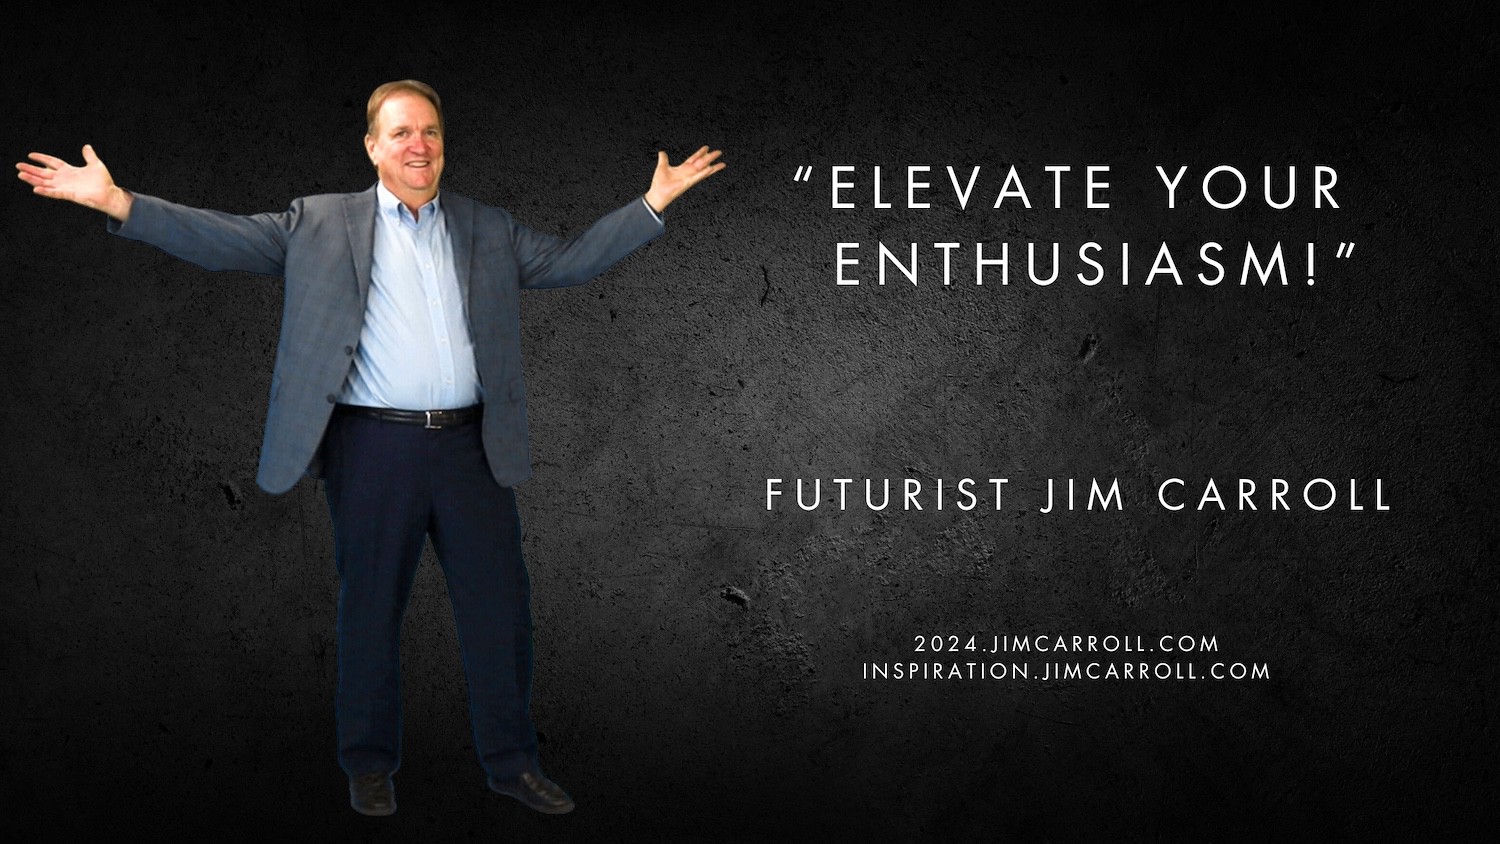 "Elevate your enthusiasm!" - Futurist Jim Carroll